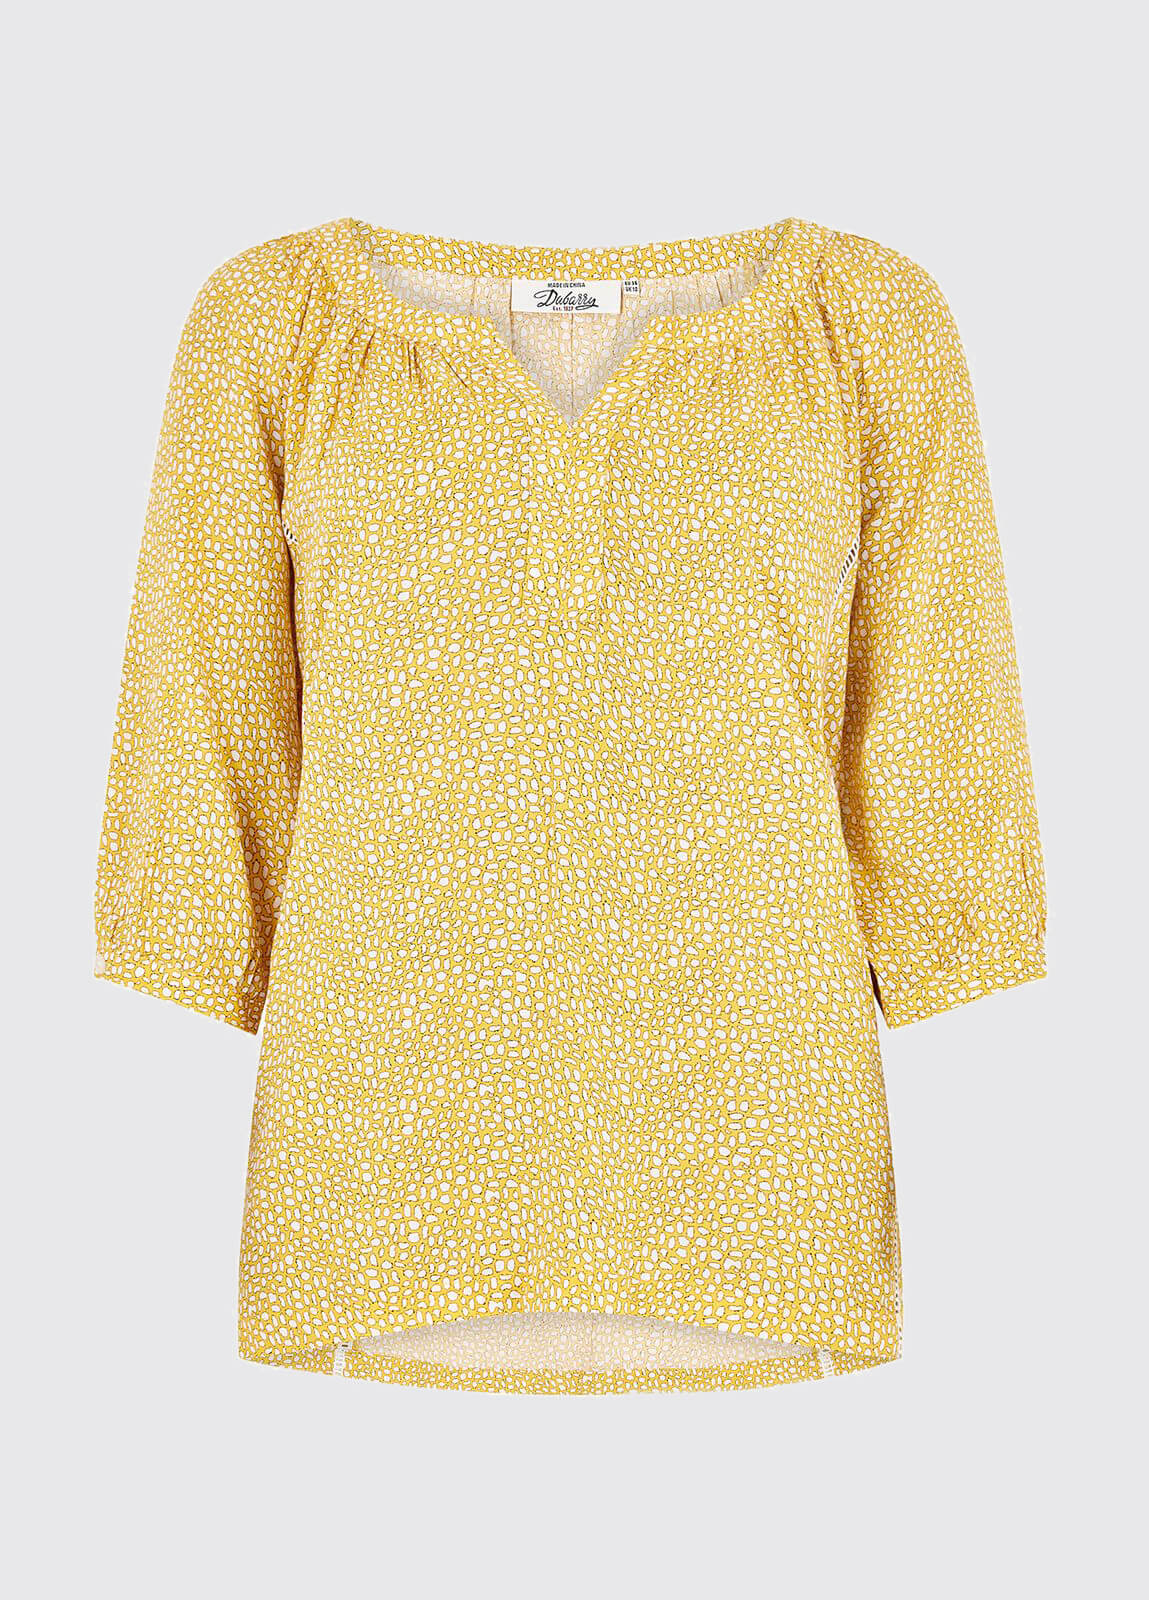 Dahlia Shirt - Sunflower